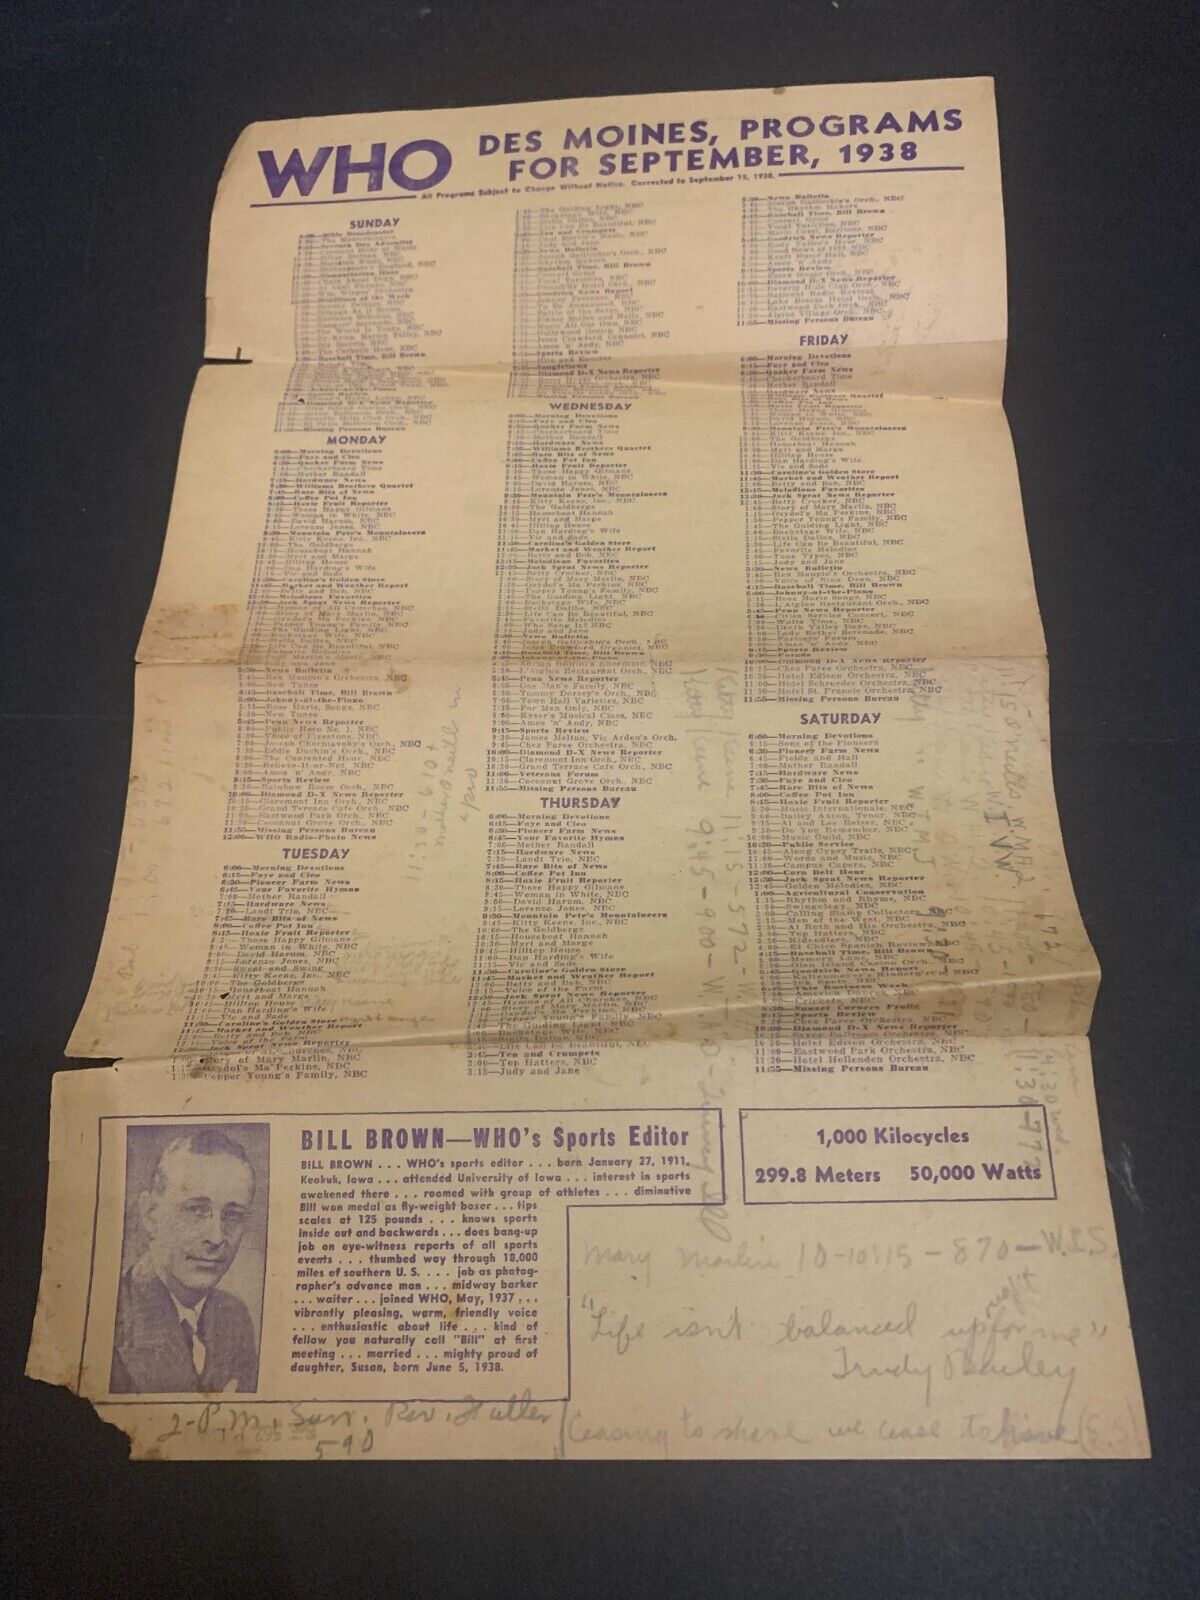 September 1938 WHO Radio Des Moines Iowa Program Schedule